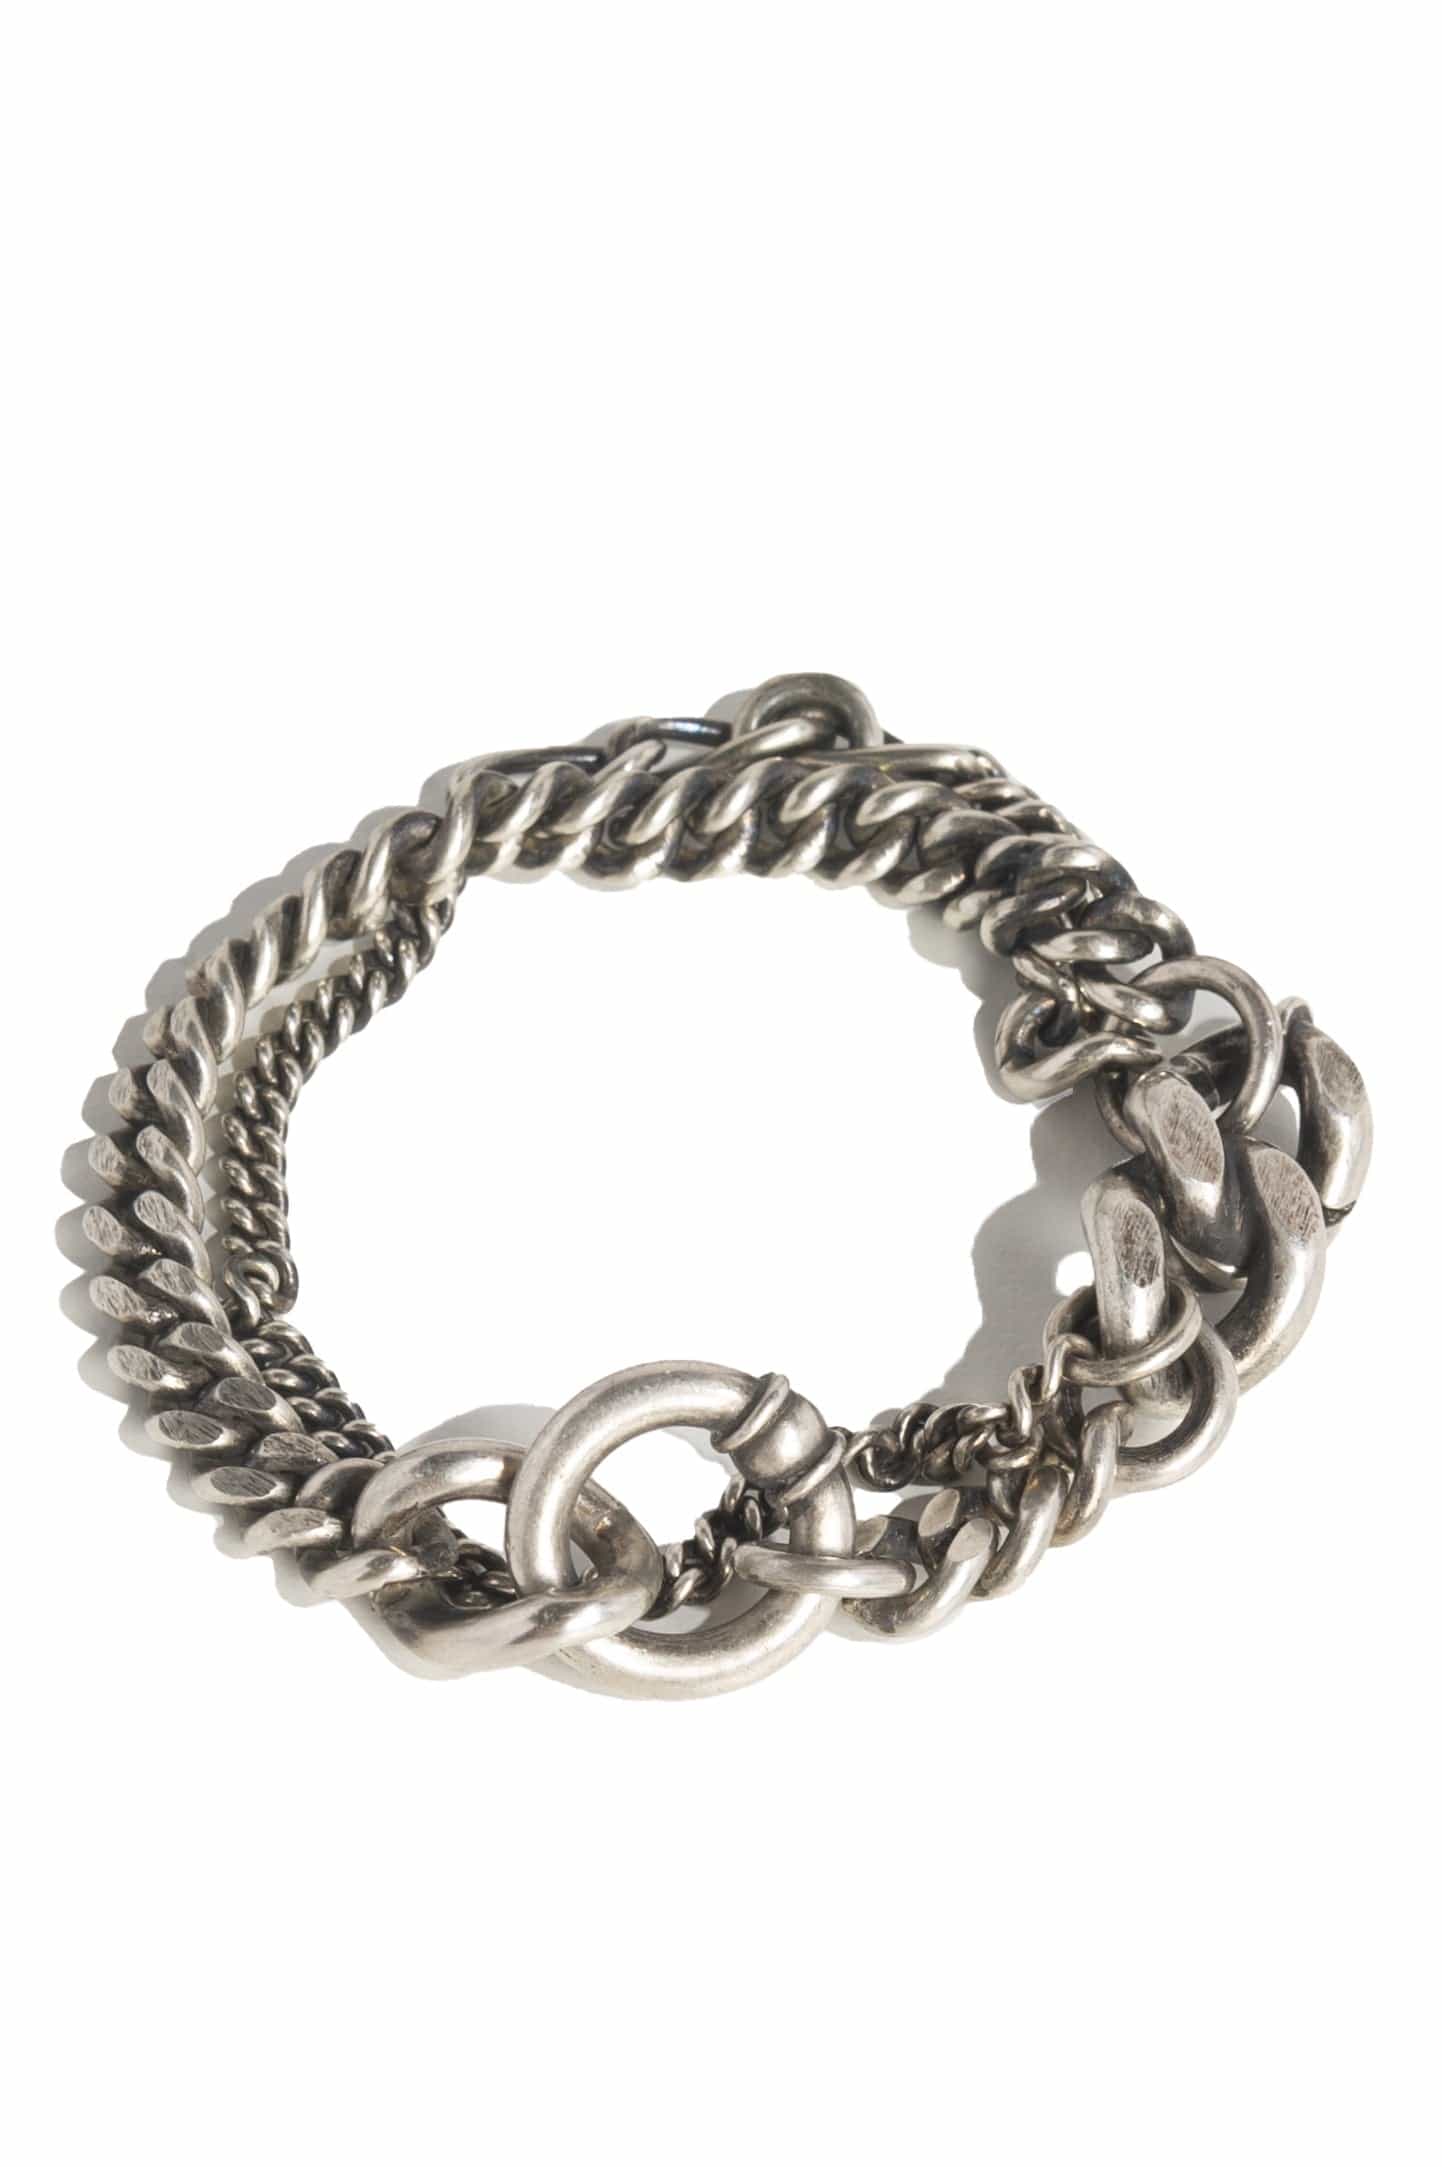 Bracelet Lifestyle Silver Two Werkstatt and Chains Fashion Ring München – Antidote